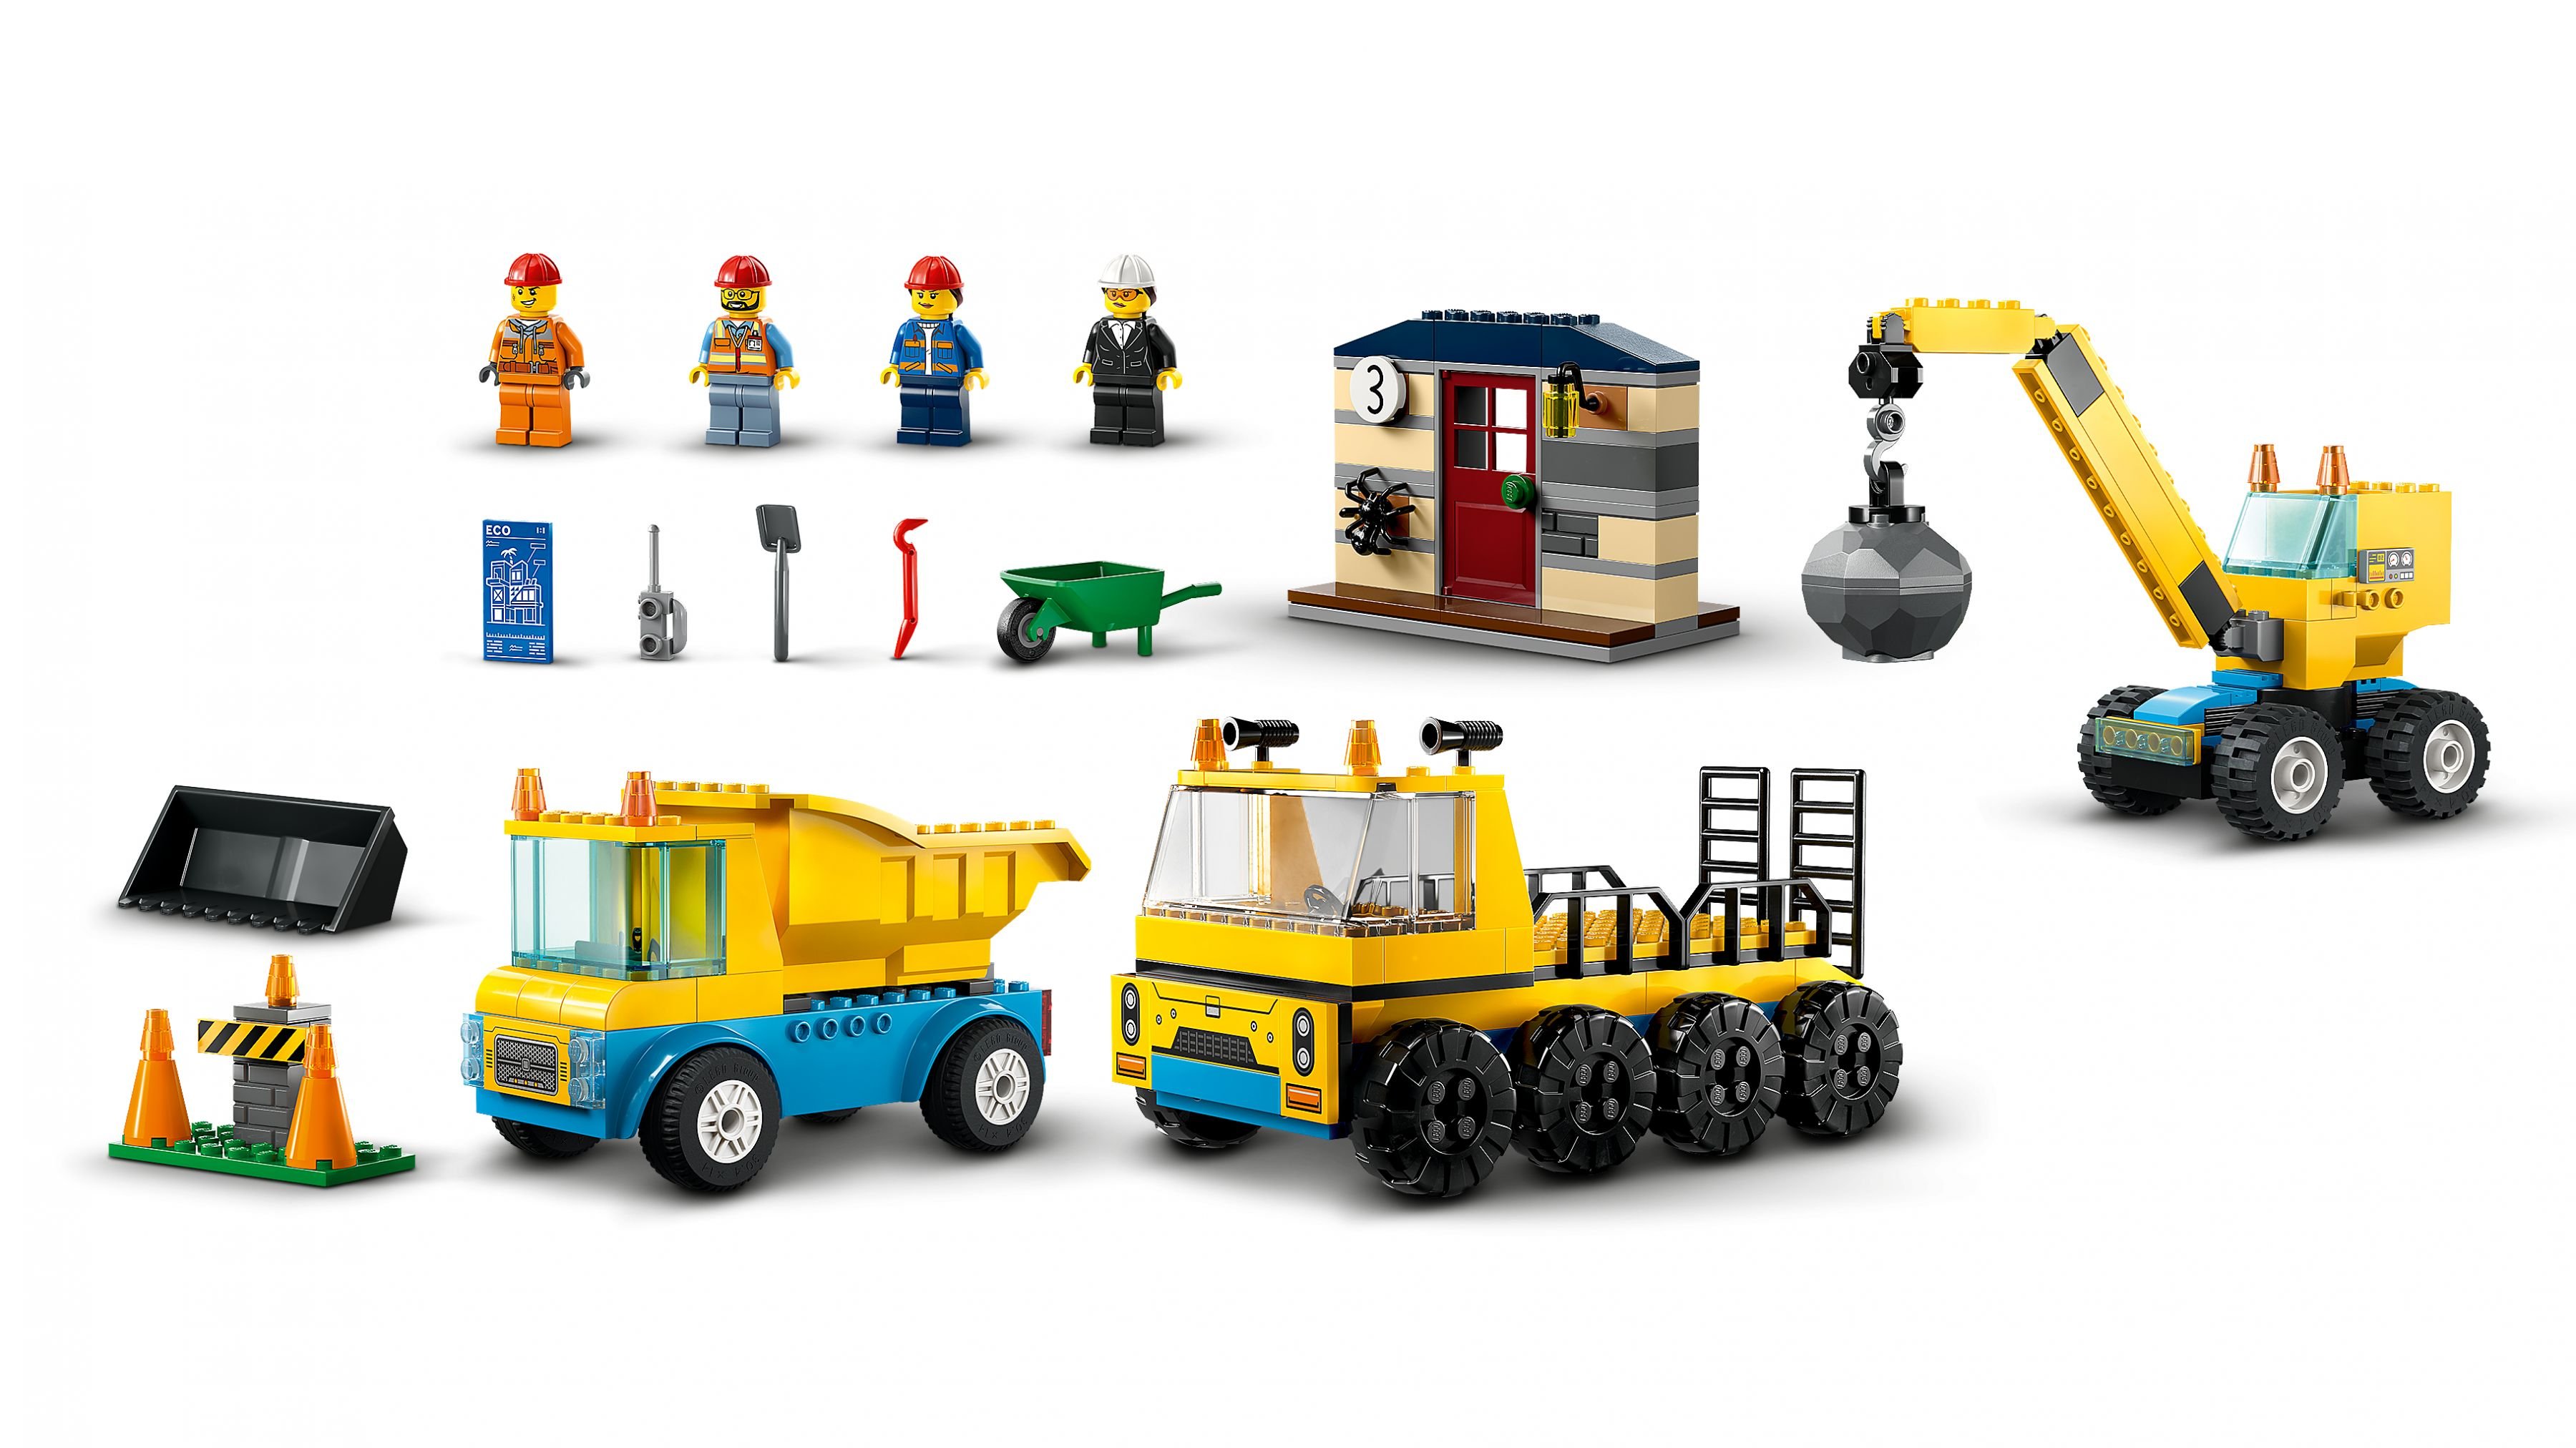 LEGO City 60391 Baufahrzeuge und Kran mit Abrissbirne LEGO_60391_WEB_SEC02_NOBG.jpg